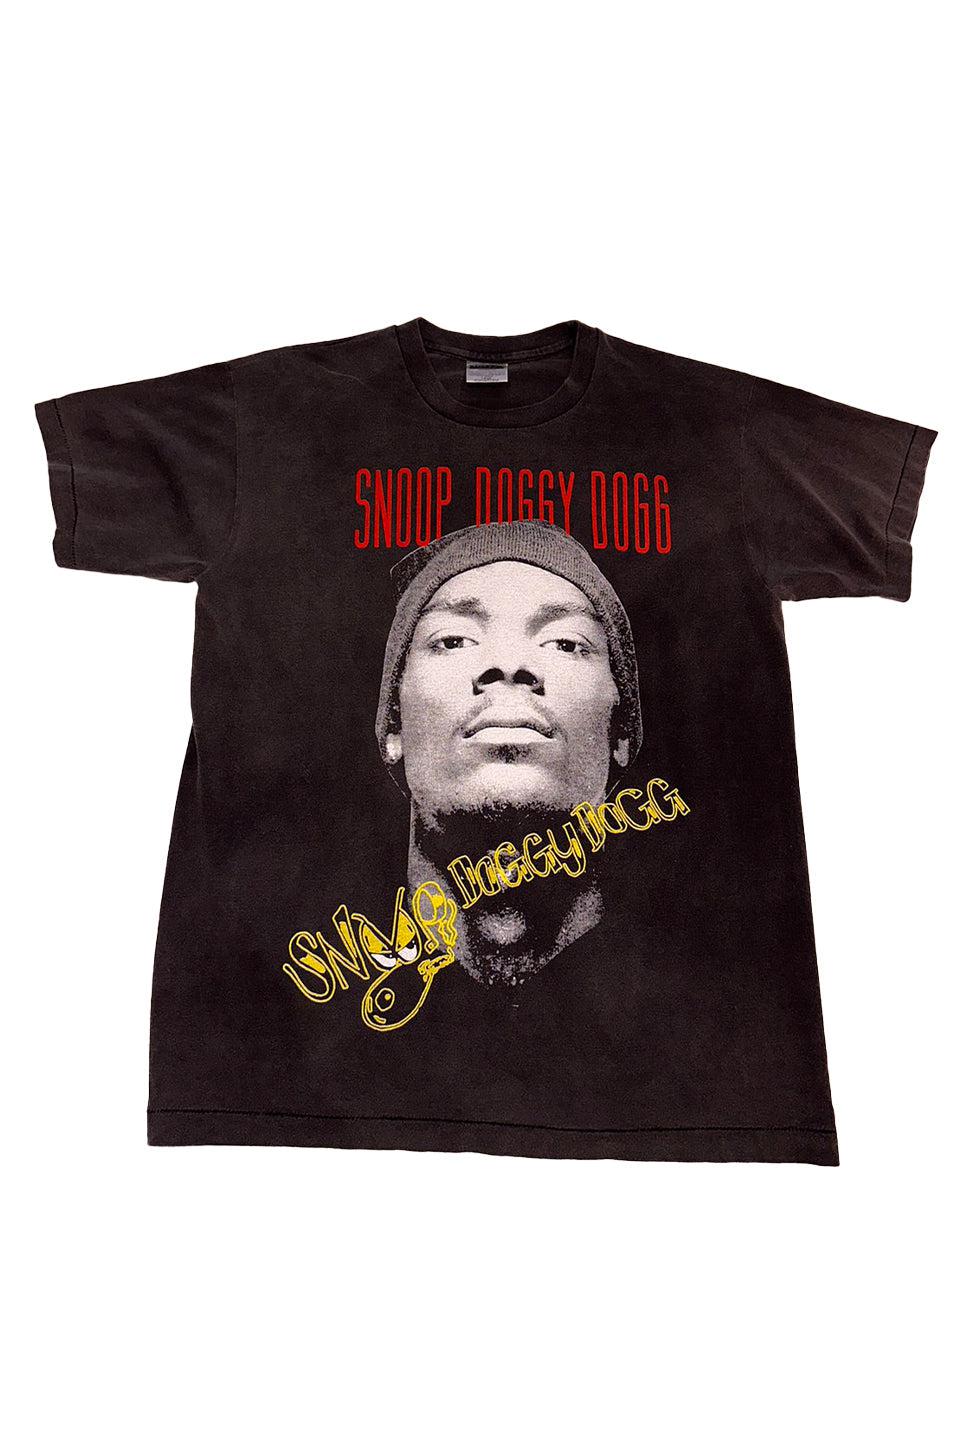 Snoop Dogg T-Shirt - Tシャツ